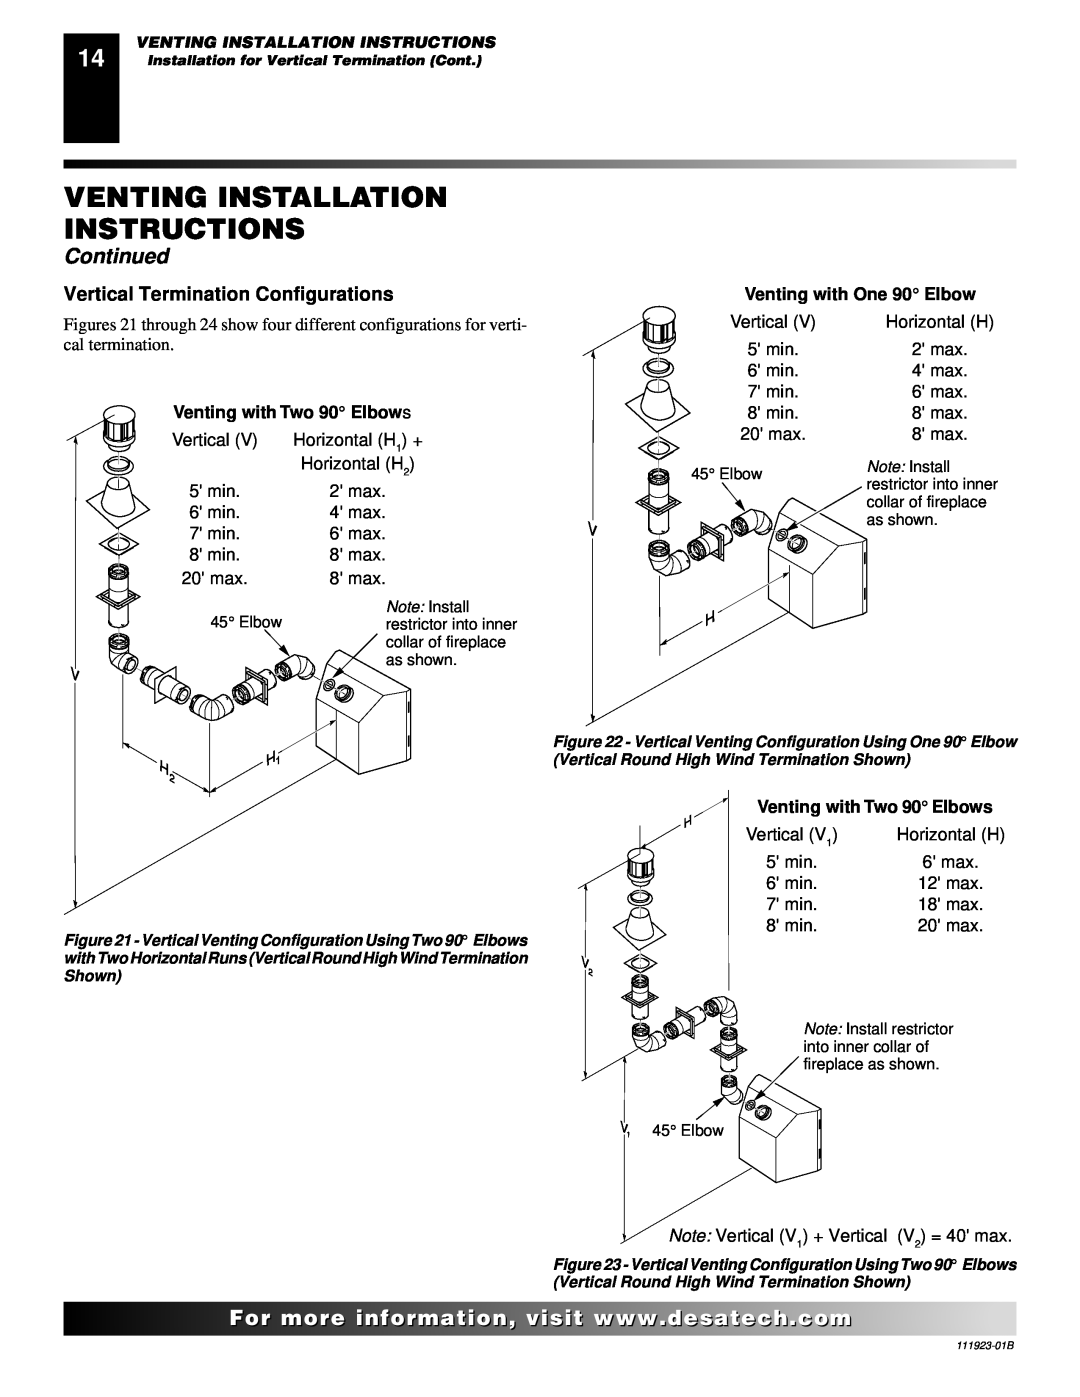 Desa (V)K36N SERIES, (V)K36P SERIES Vertical Termination Configurations, Venting Installation Instructions, Continued 